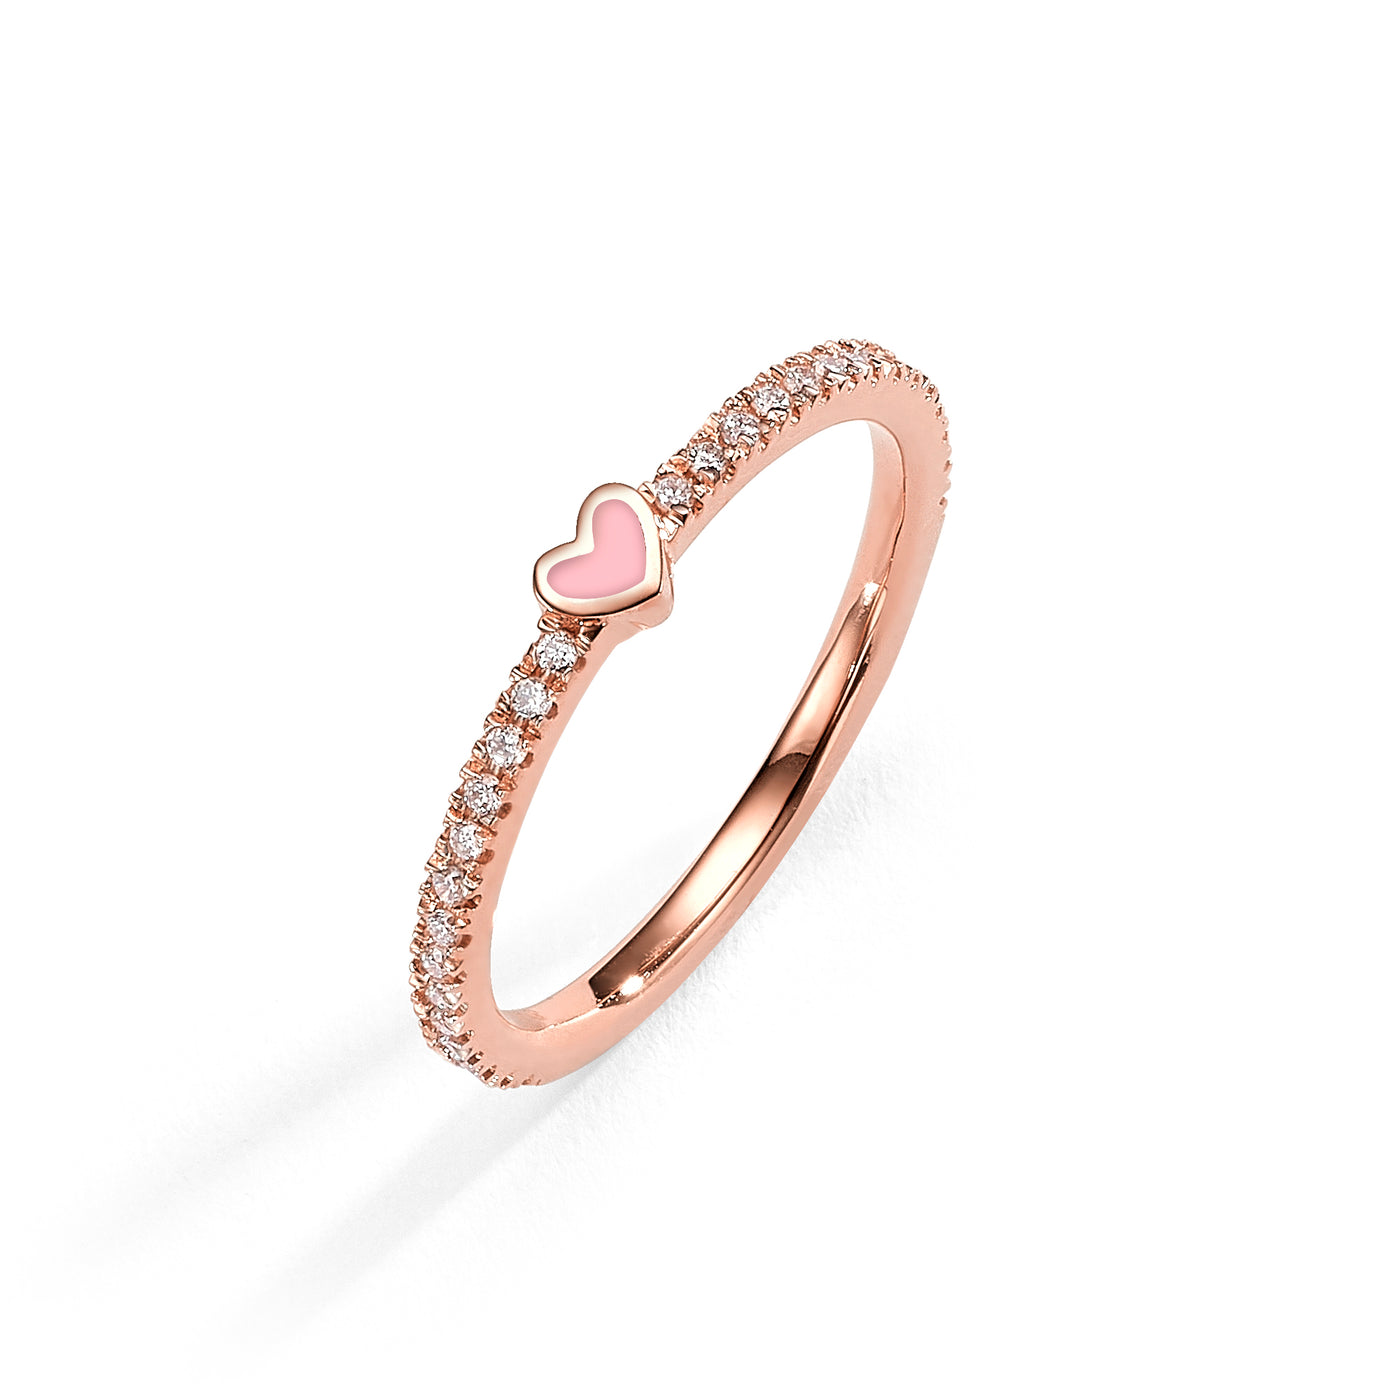 One heart diamonds ring- light pink